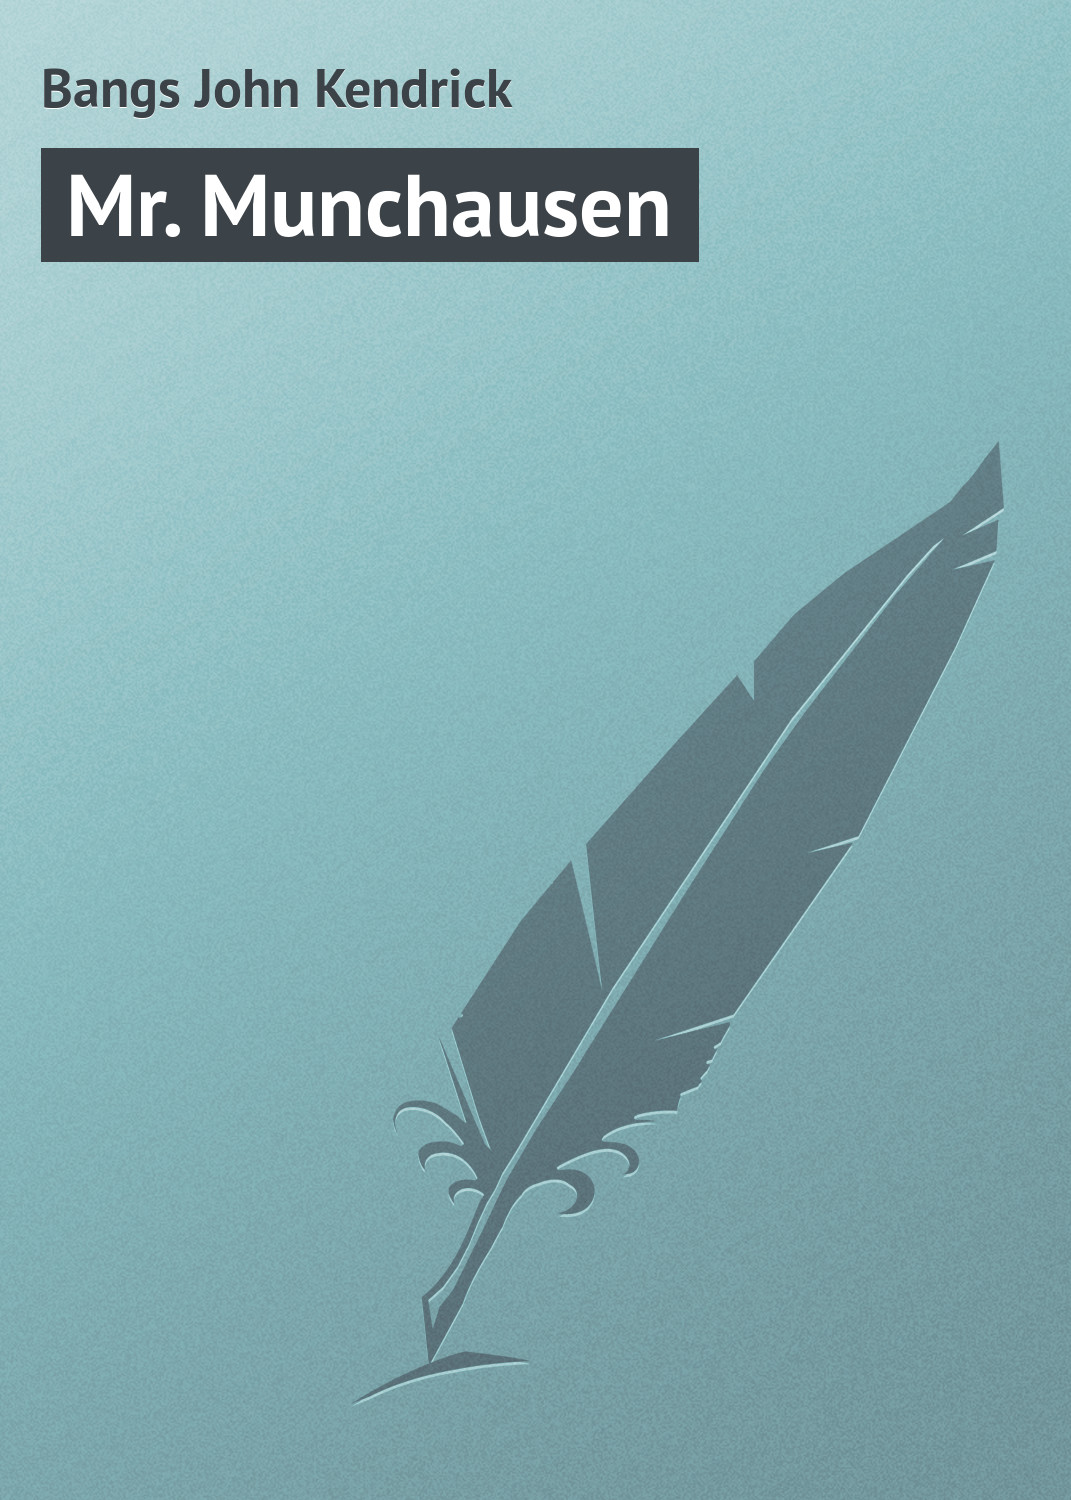 Mr. Munchausen